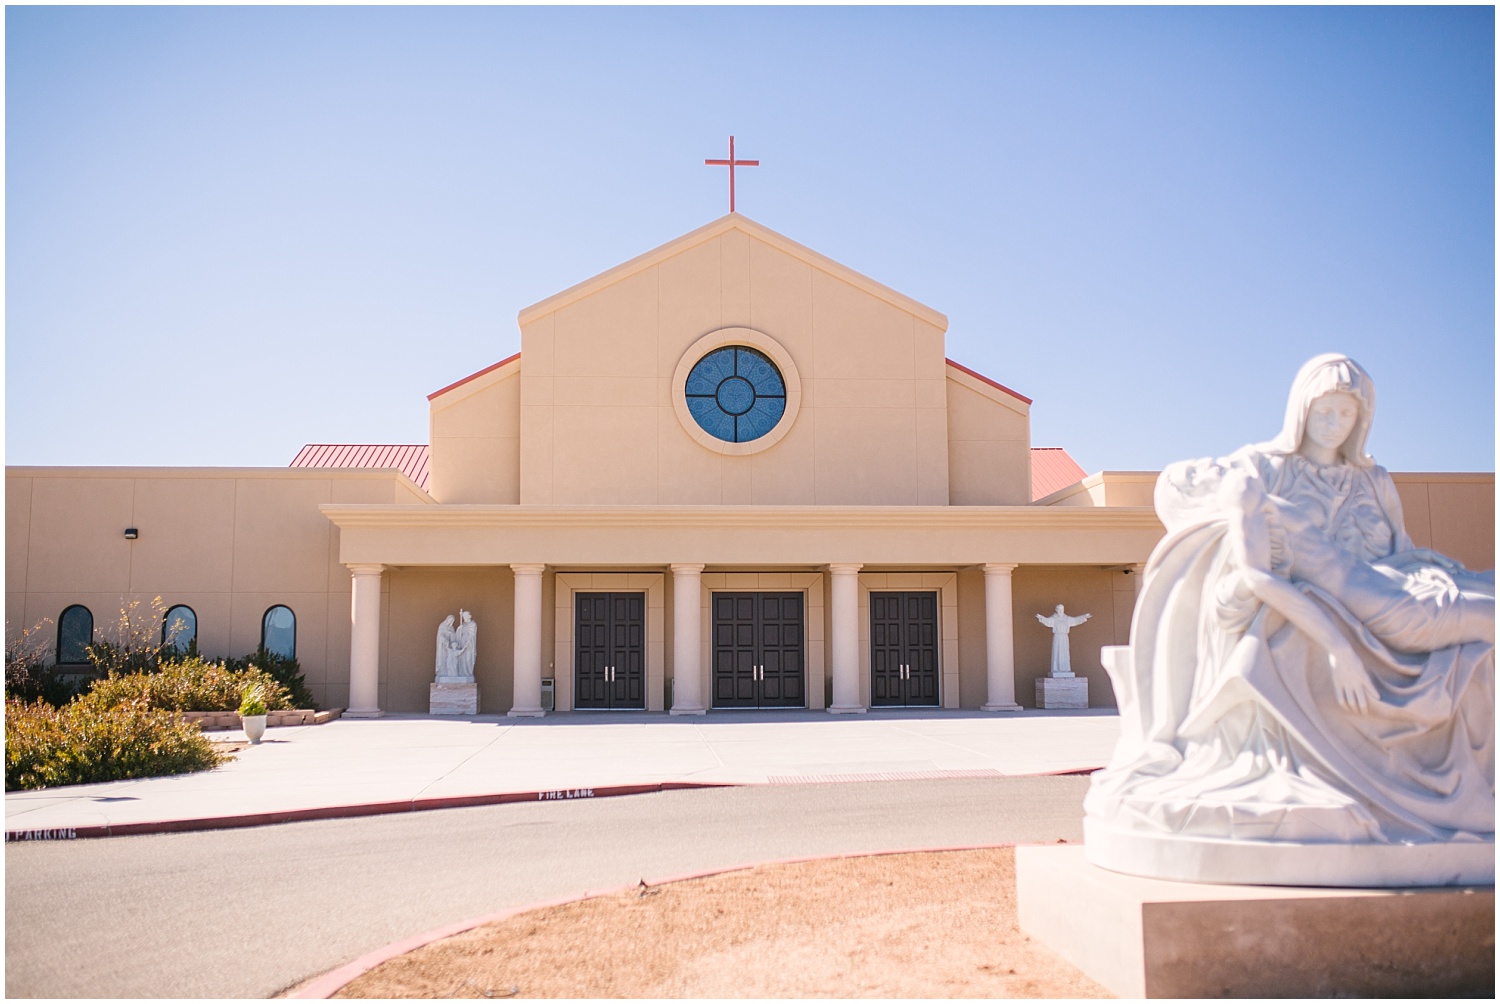 Church of the Incarnation Catholic Church in Rio Rancho New Mexico